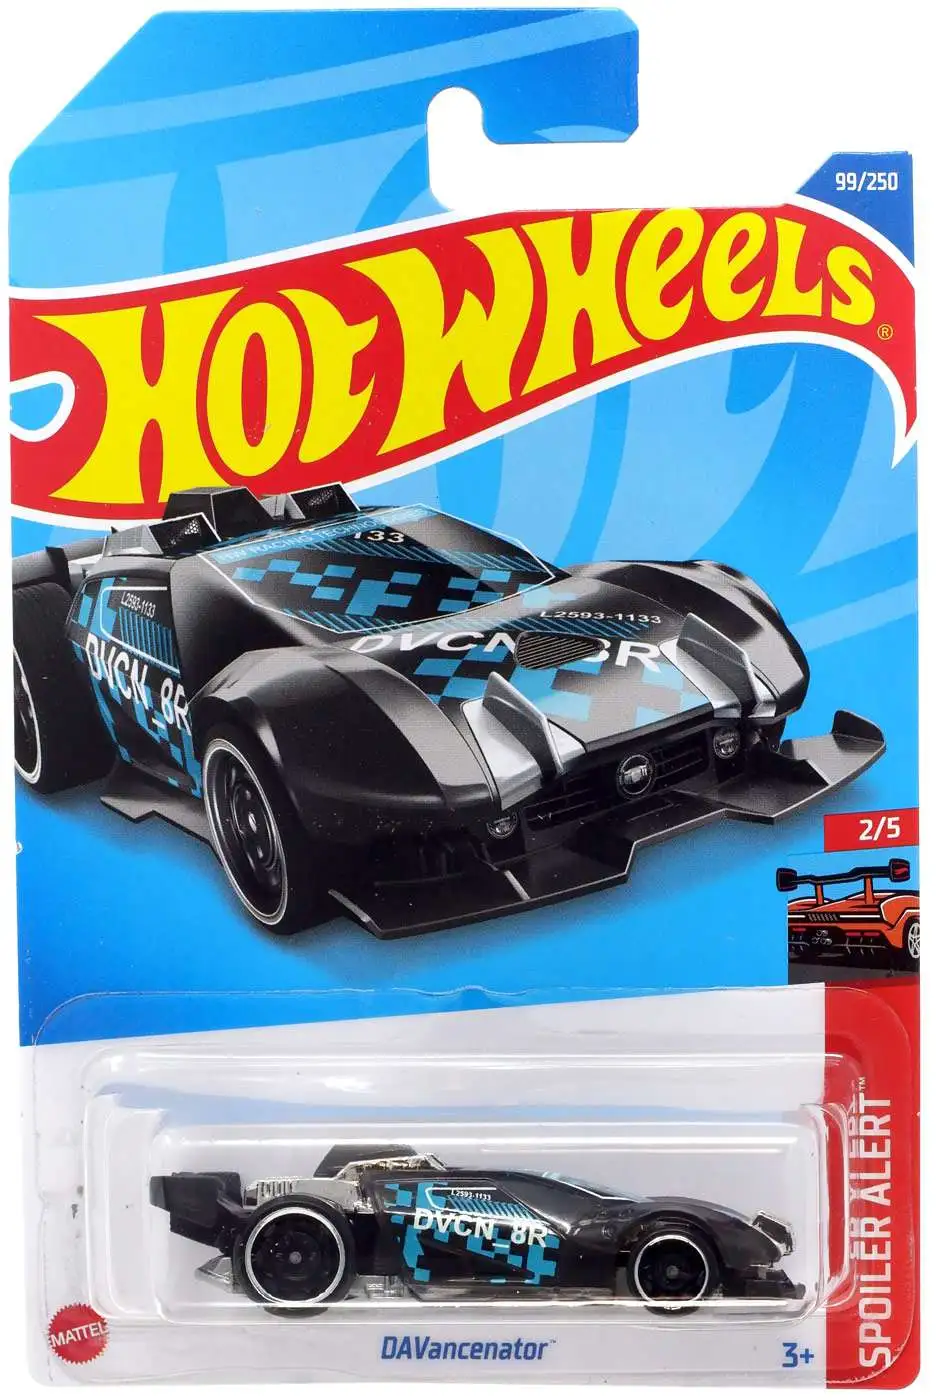 Hot Wheels Spoiler Alert DAVancenator 164 Diecast Car 25 Mattel Toys ...